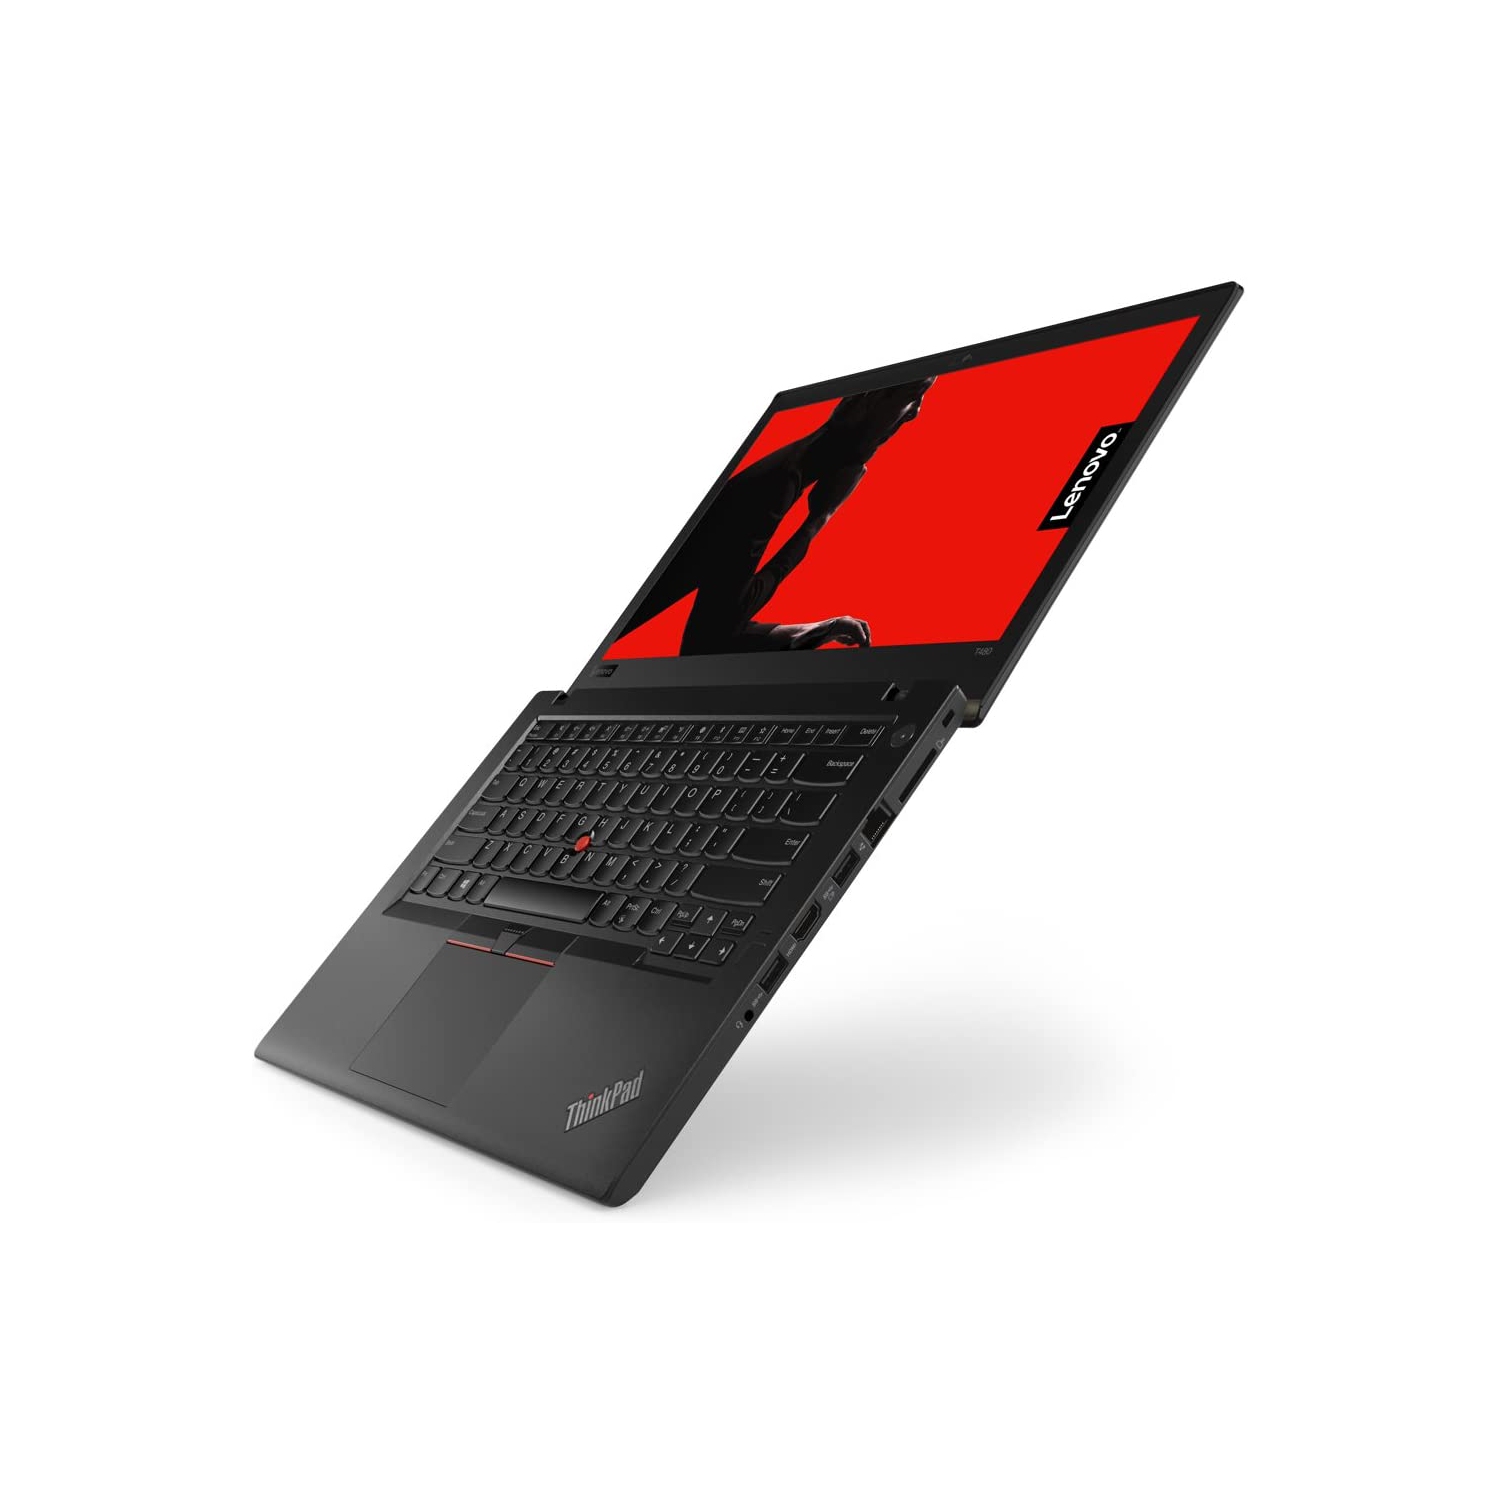 Refurbished (Good) - Lenovo Thinkpad T480s Laptop 14" FHD TouchScreen